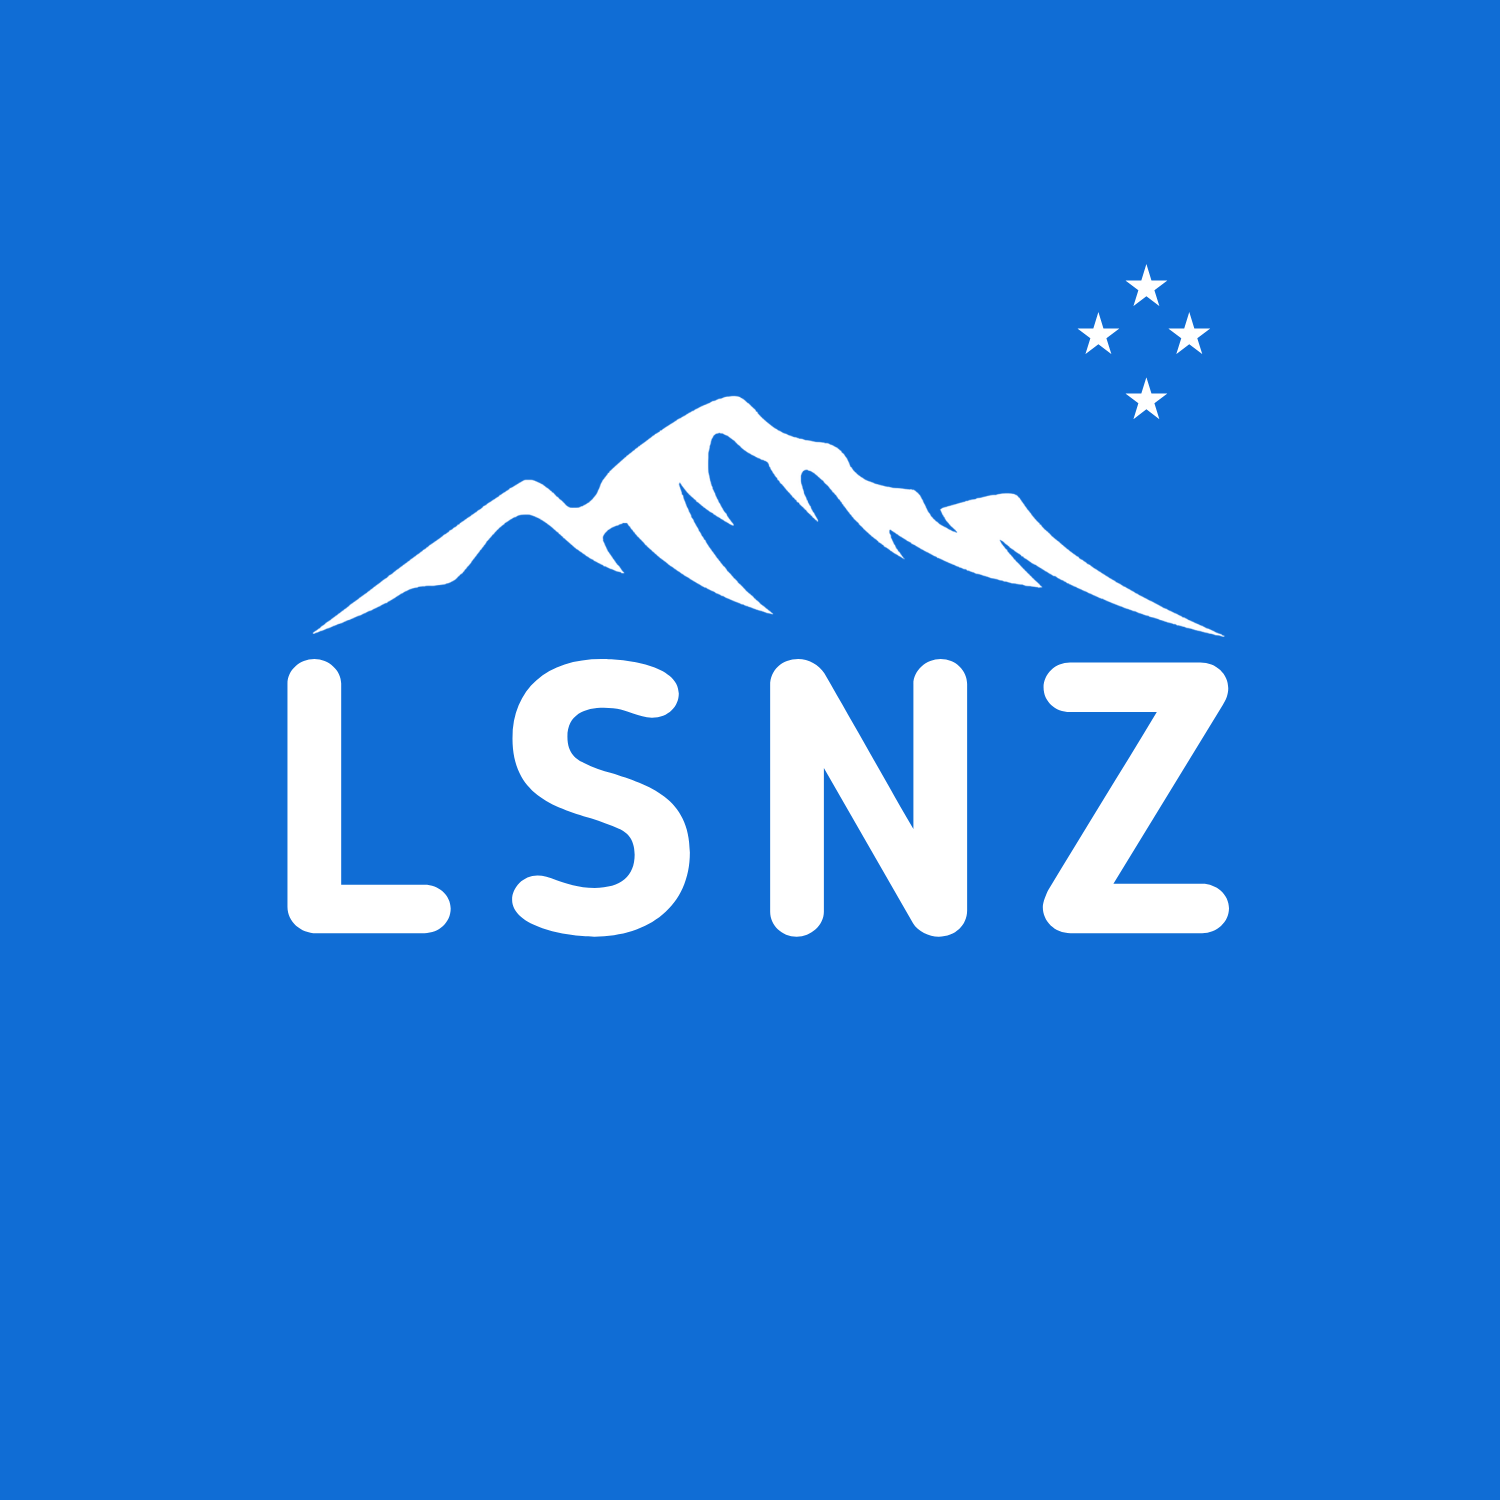 LSNZ Logo